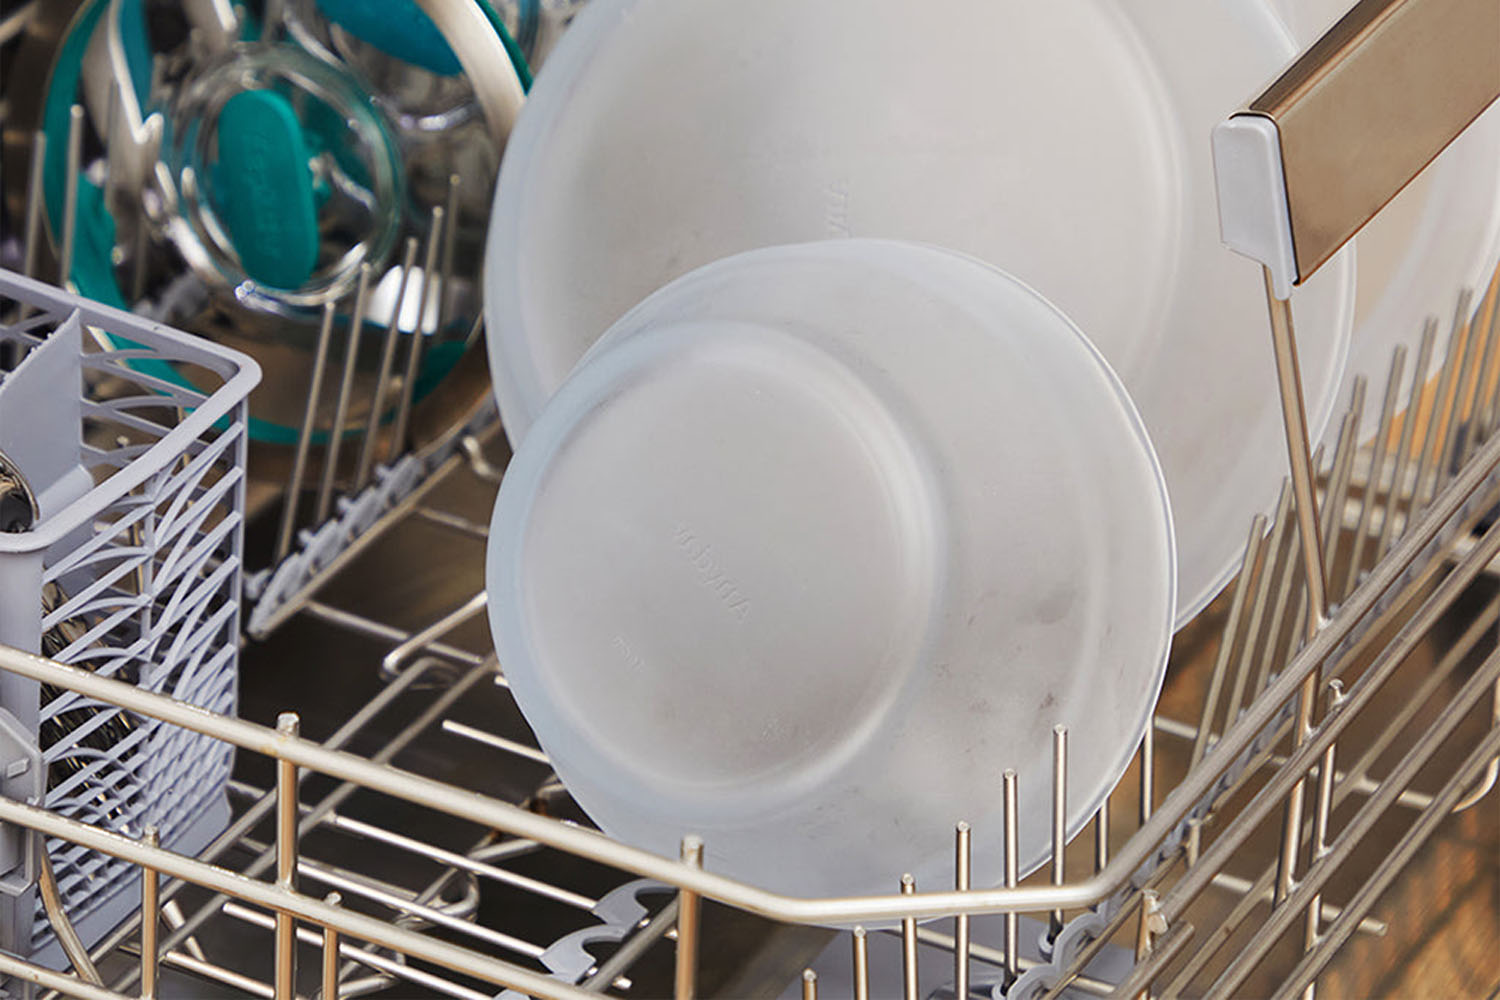 https://www.insidehook.com/wp-content/uploads/2022/03/Anyday-Everyday-Bowl-Dishwasher.jpg?w=1500&resize=1500%2C1000